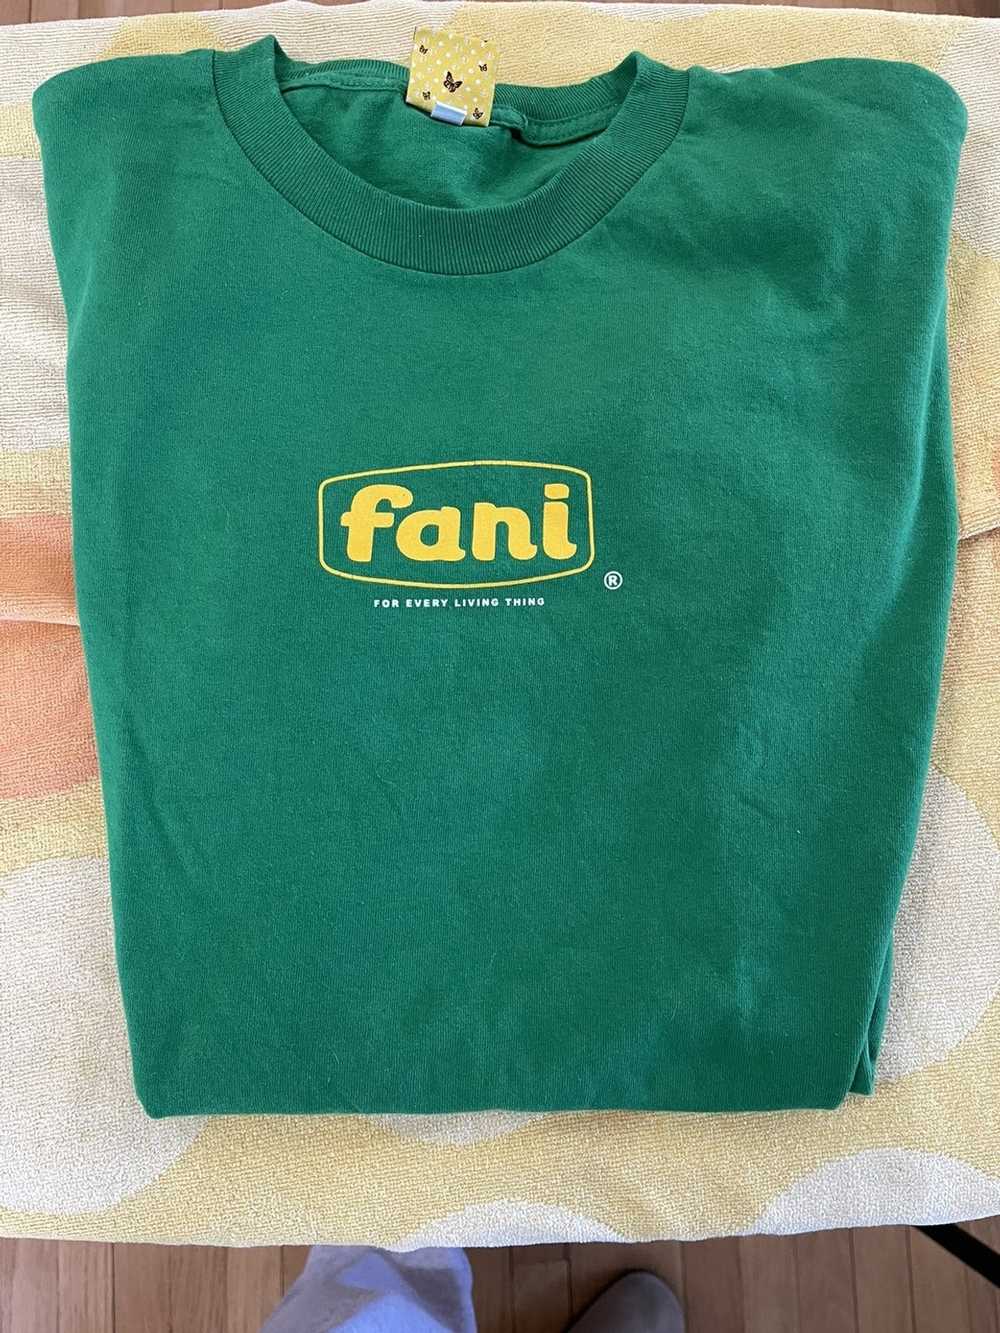 FELT × Streetwear Felt x Fani Tshirt - image 1